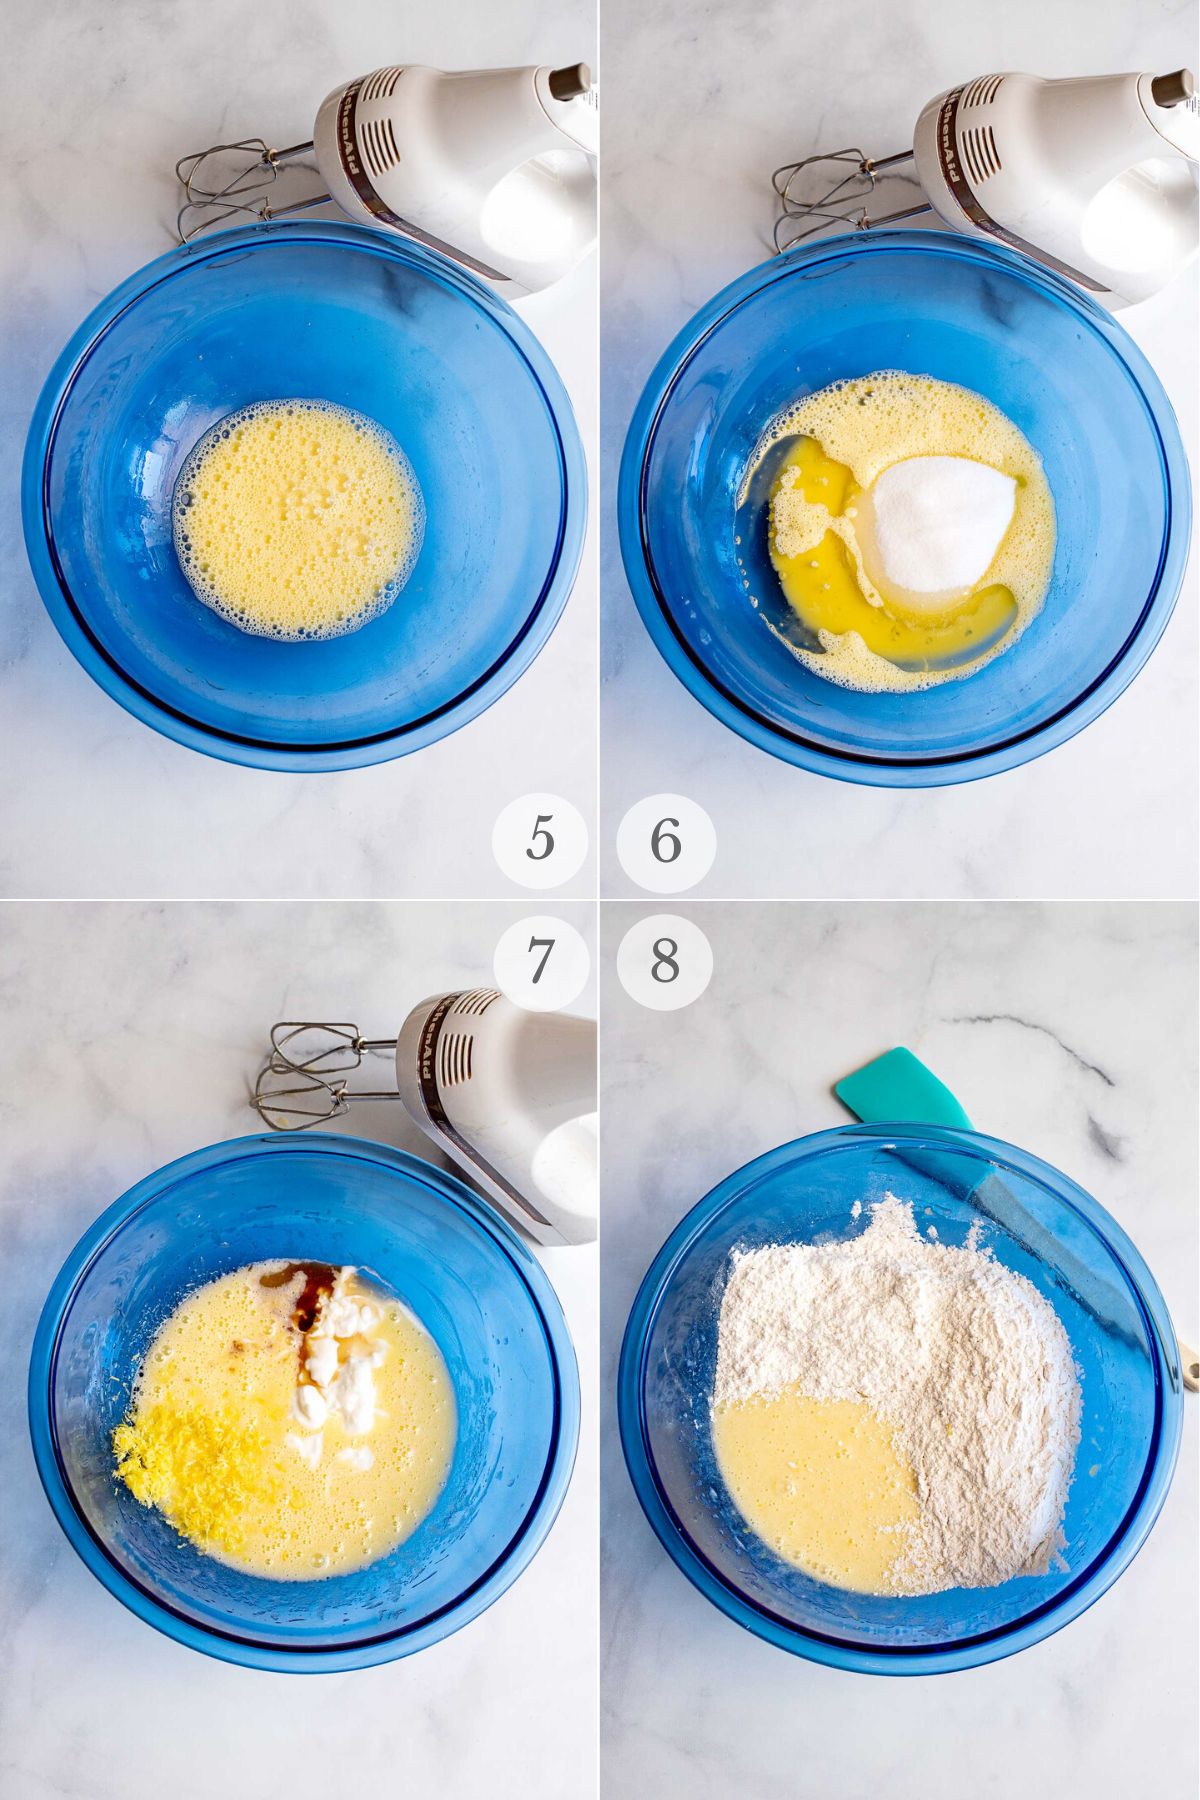 lemon muffins recipe steps 5-8.